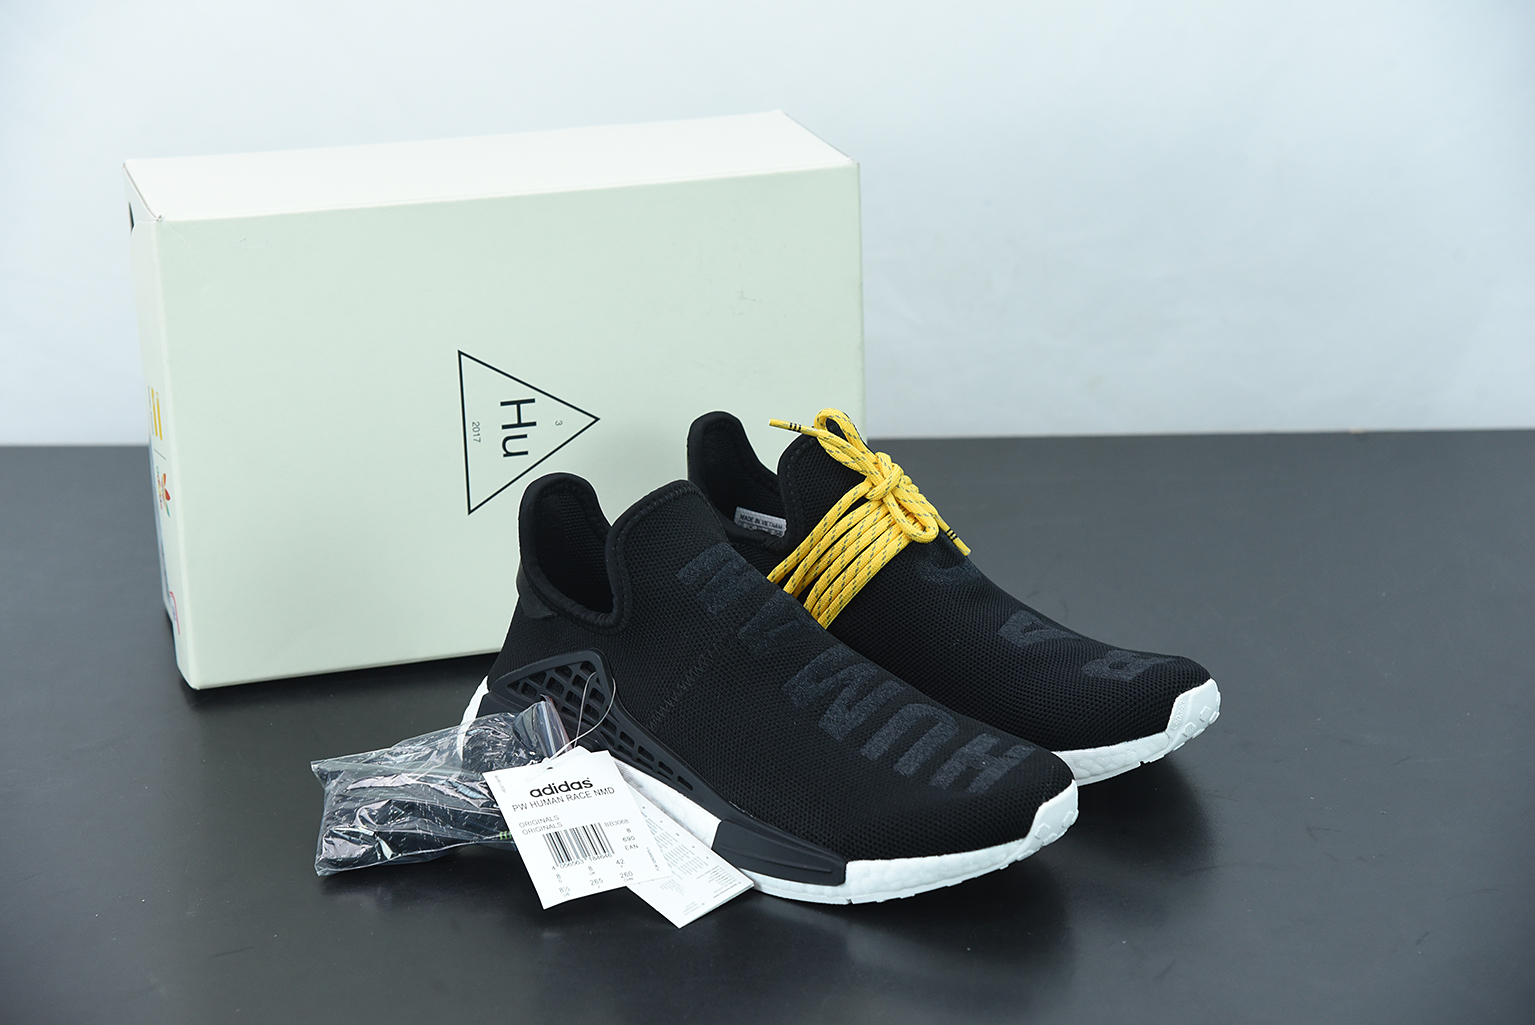 barajar intencional Biblioteca troncal adidas originals zx700 g95286 athletic shoes black